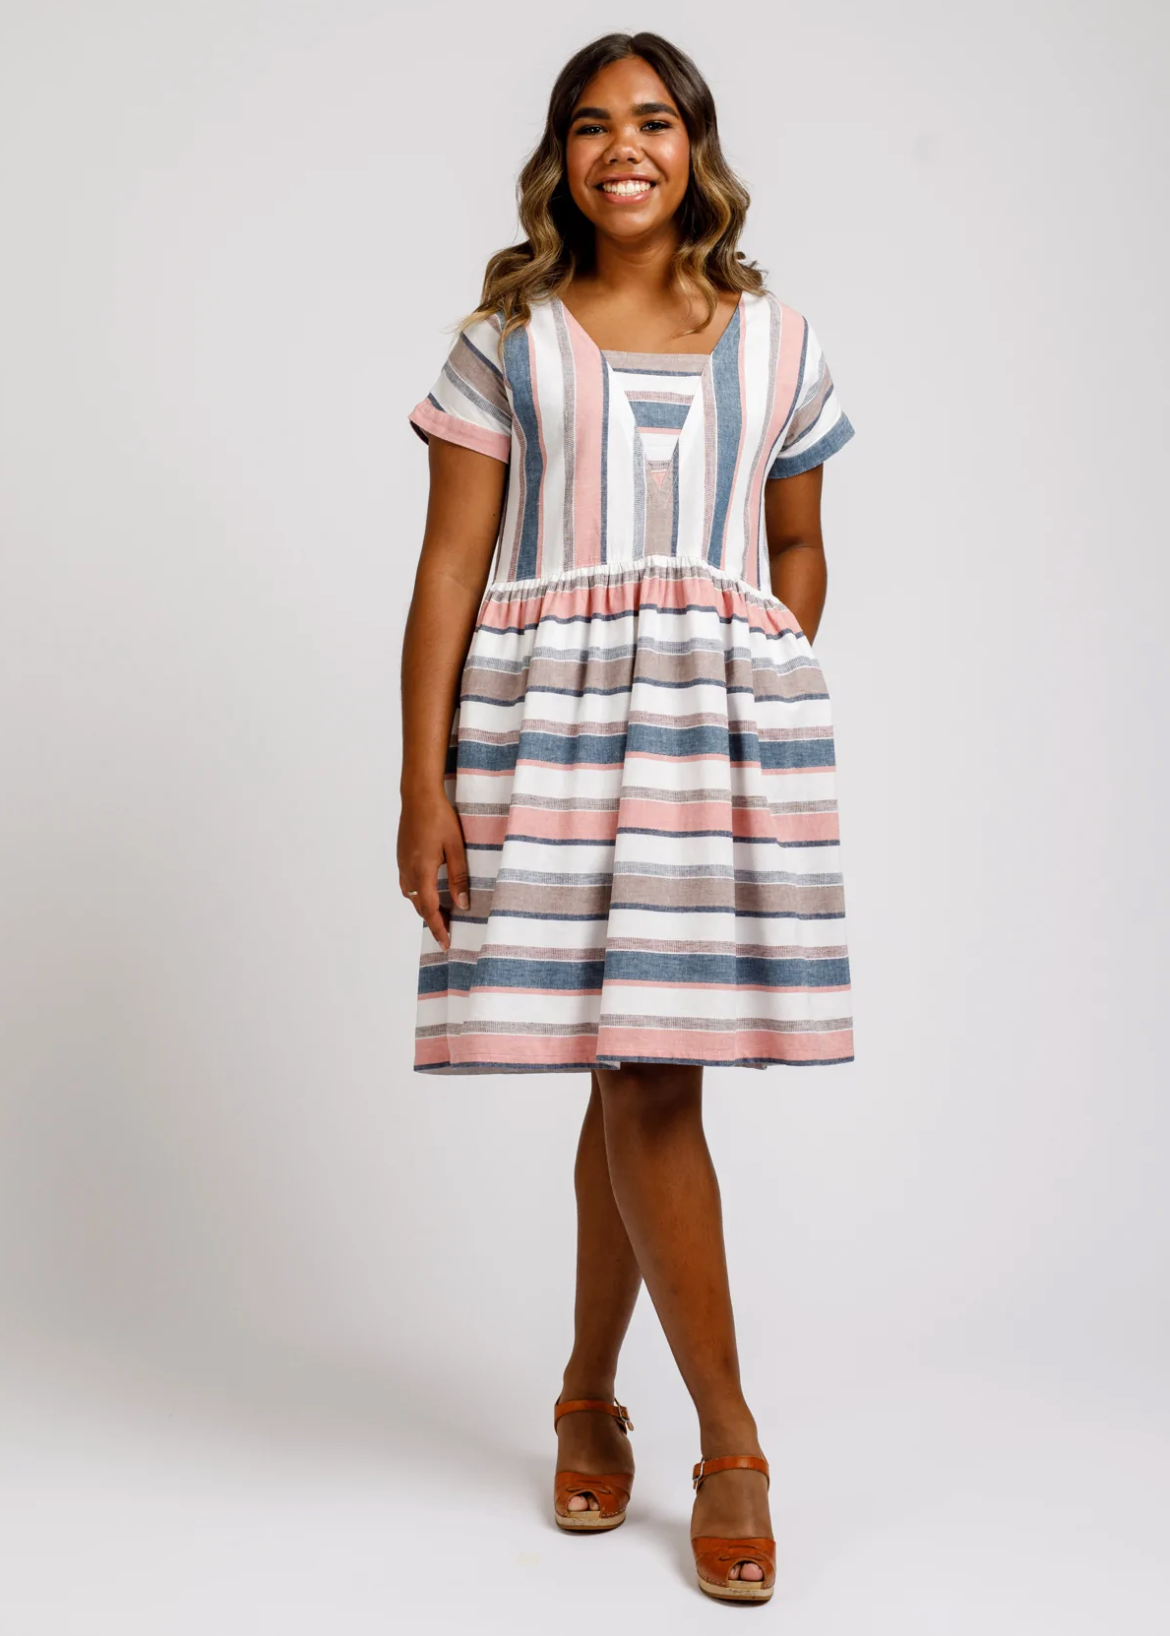 Olive dress and top - Paper pattern - MEGAN NIELSEN